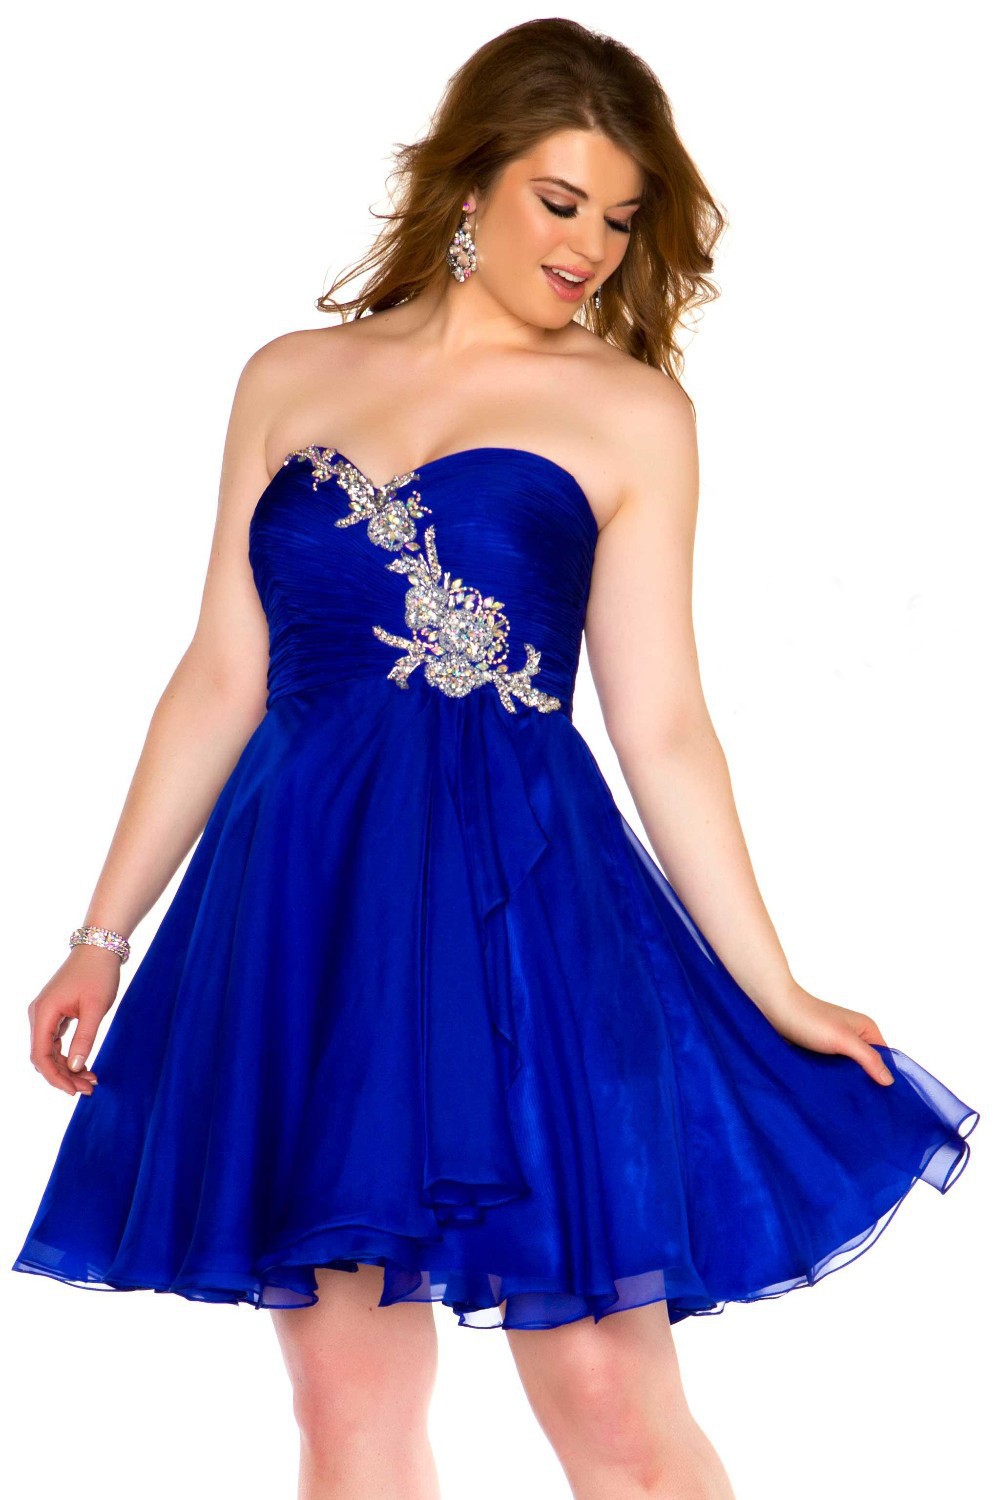 Elegant Royal Blue Strapless Cocktail Dresses Hot Short Homecoming